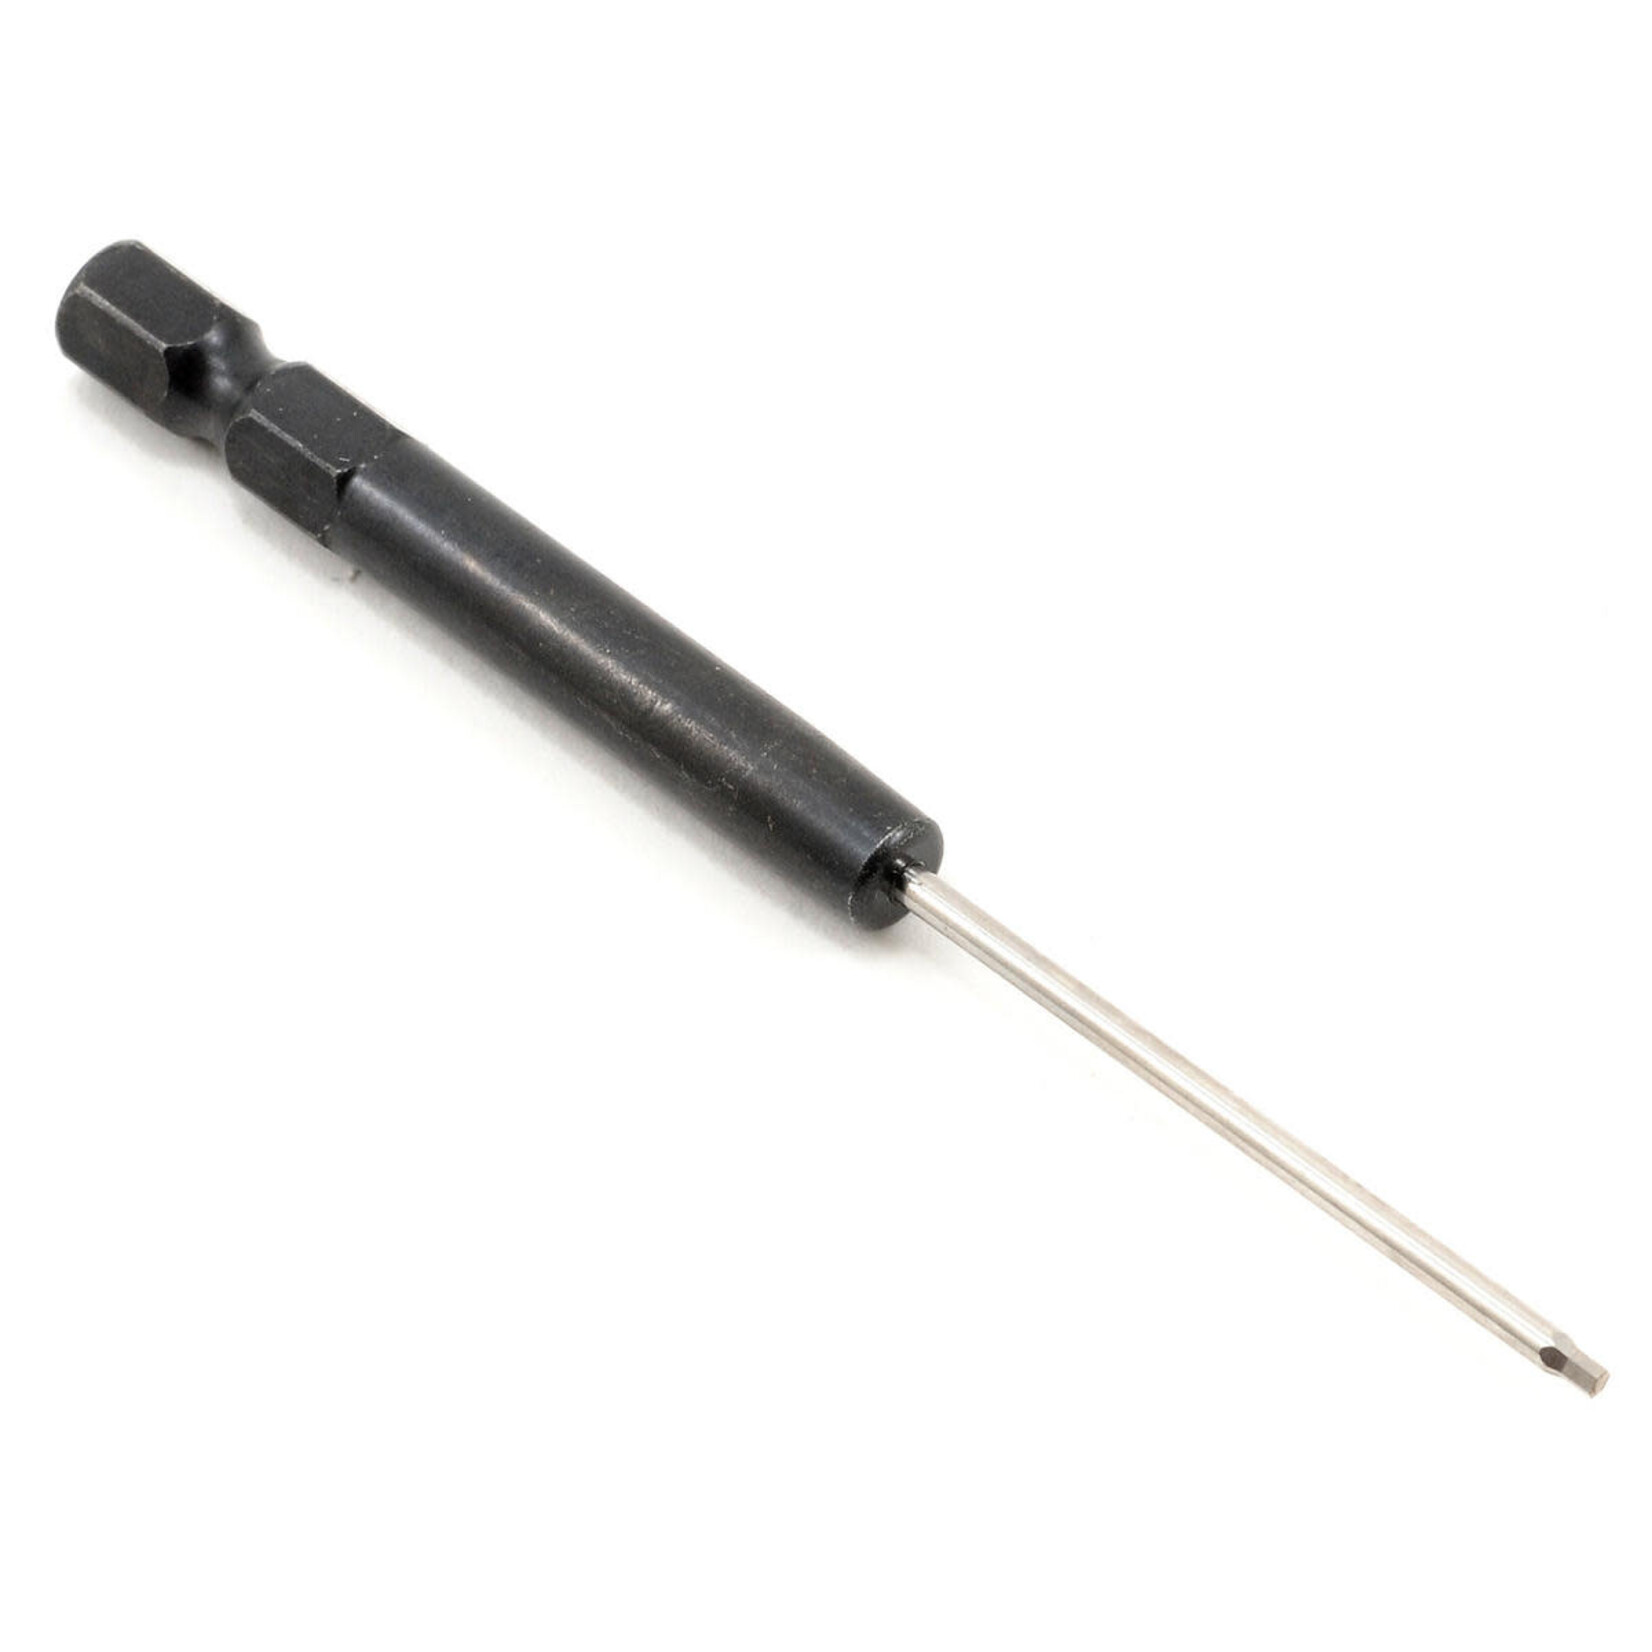 MIP MIP Speed Tip Hex Wrench (1.3mm) #9013s